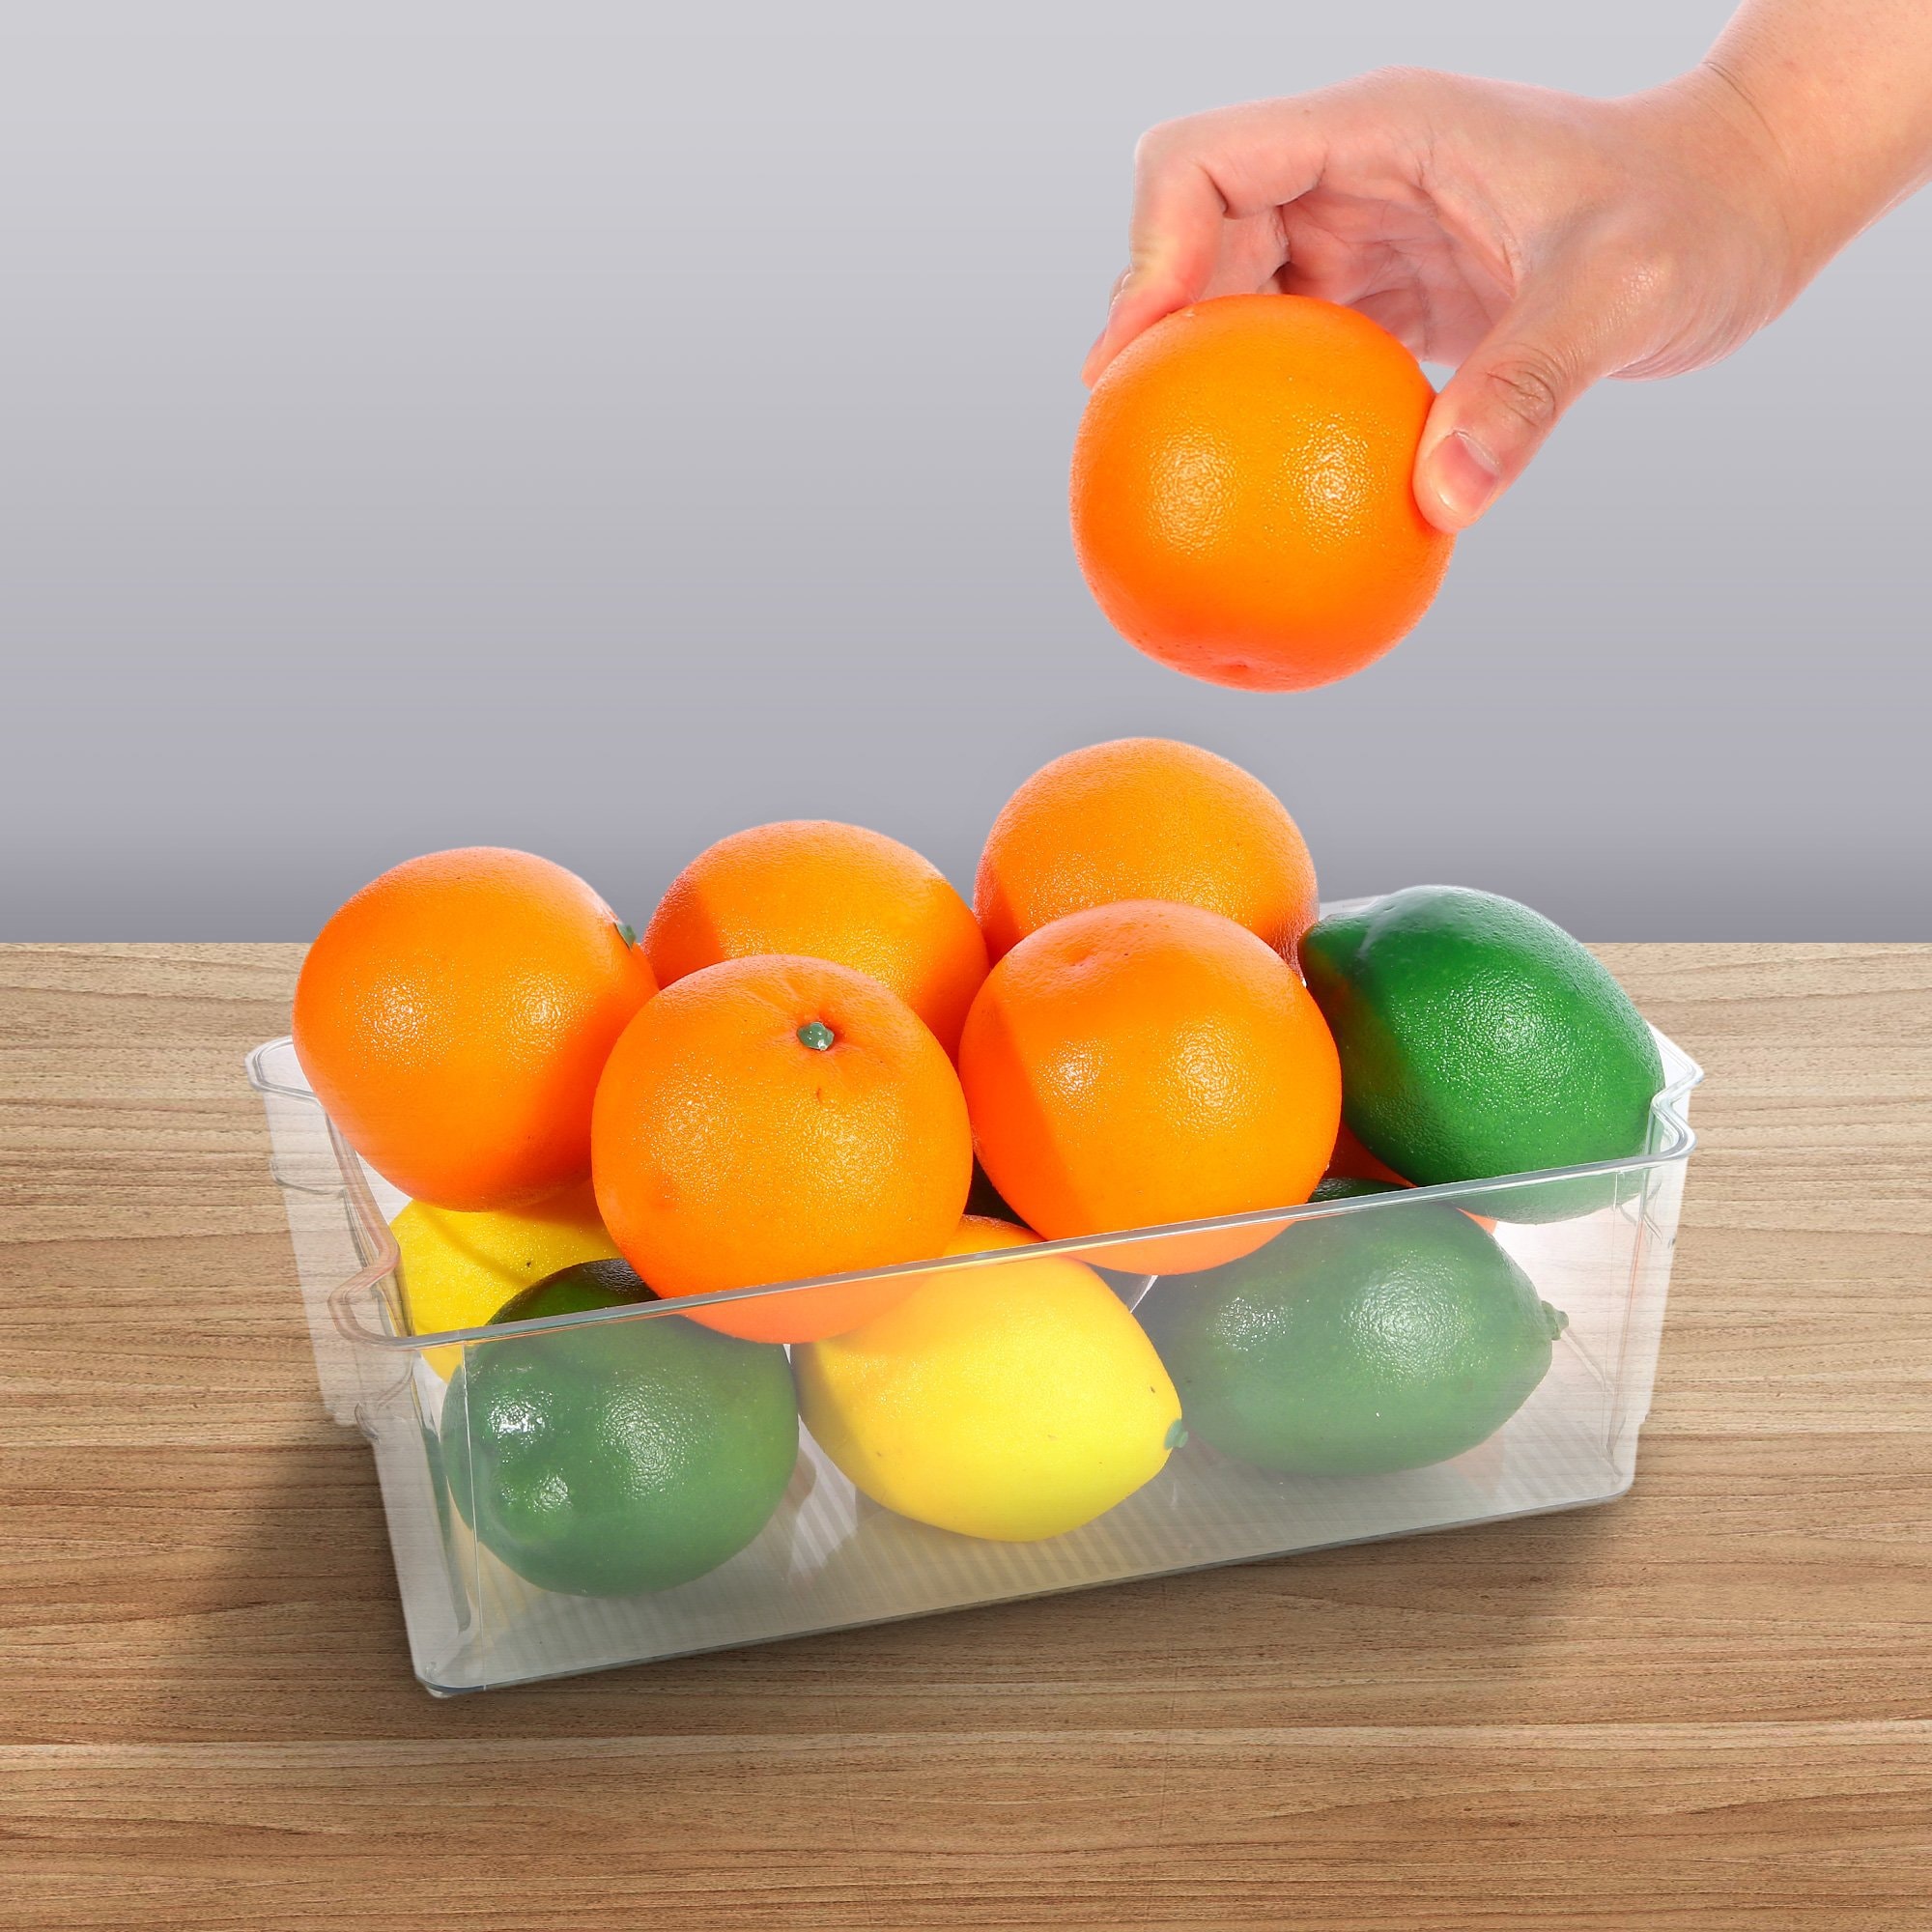 ROSELIFE 饮品蔬菜水果分类厨房冰箱收纳盒 11.8"x6.3"x3.5"